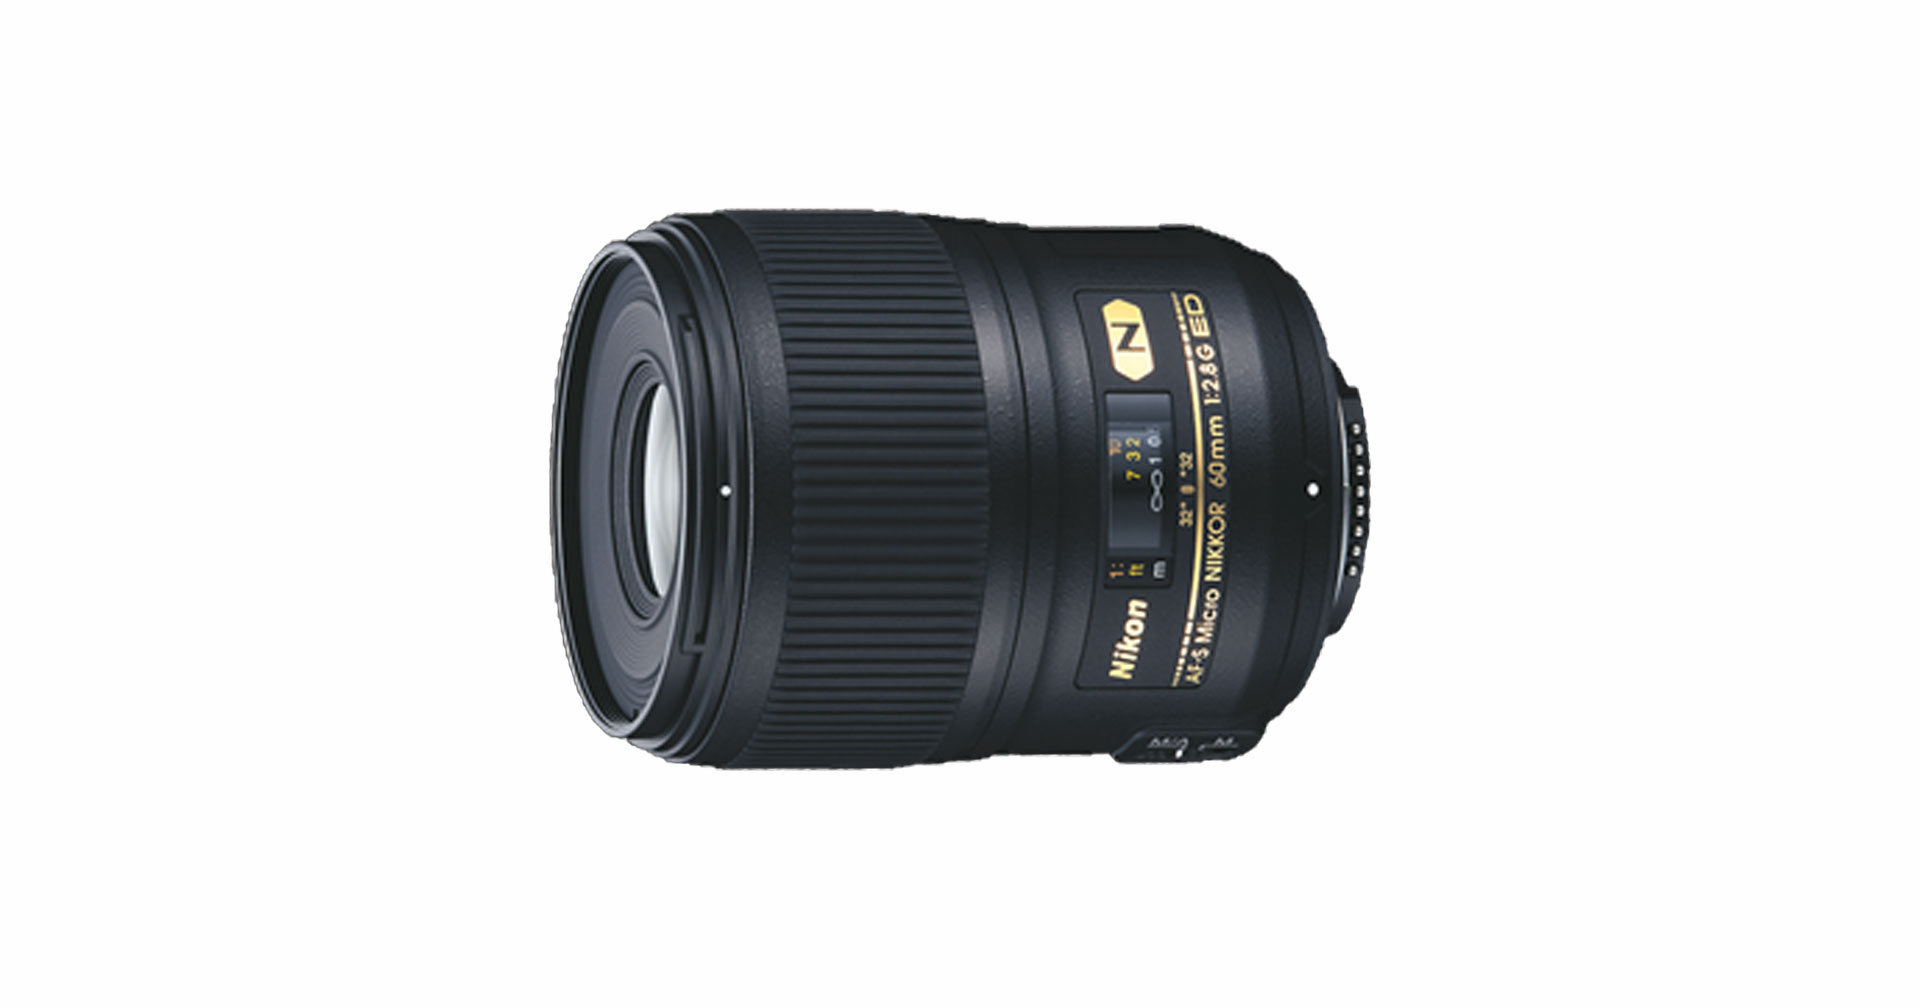 Nikon ยุติการผลิตเลนส์ DSLR ‘Nikon AF-S Micro NIKKOR 60mm f/2.8G ED’